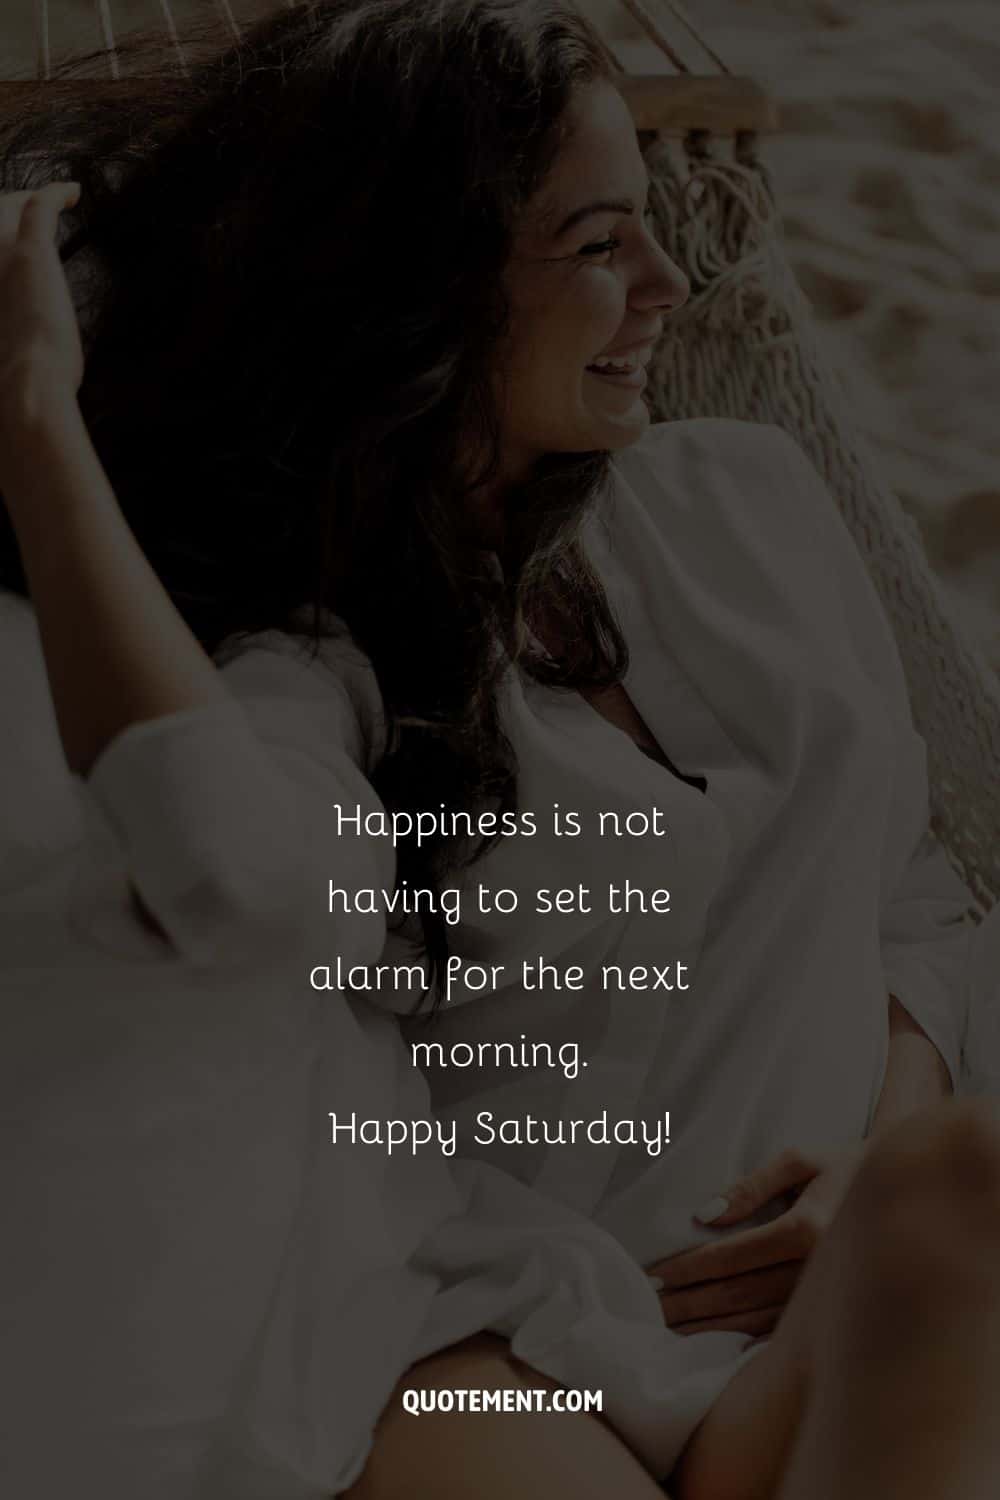 smiling woman image representing happy Saturday quote